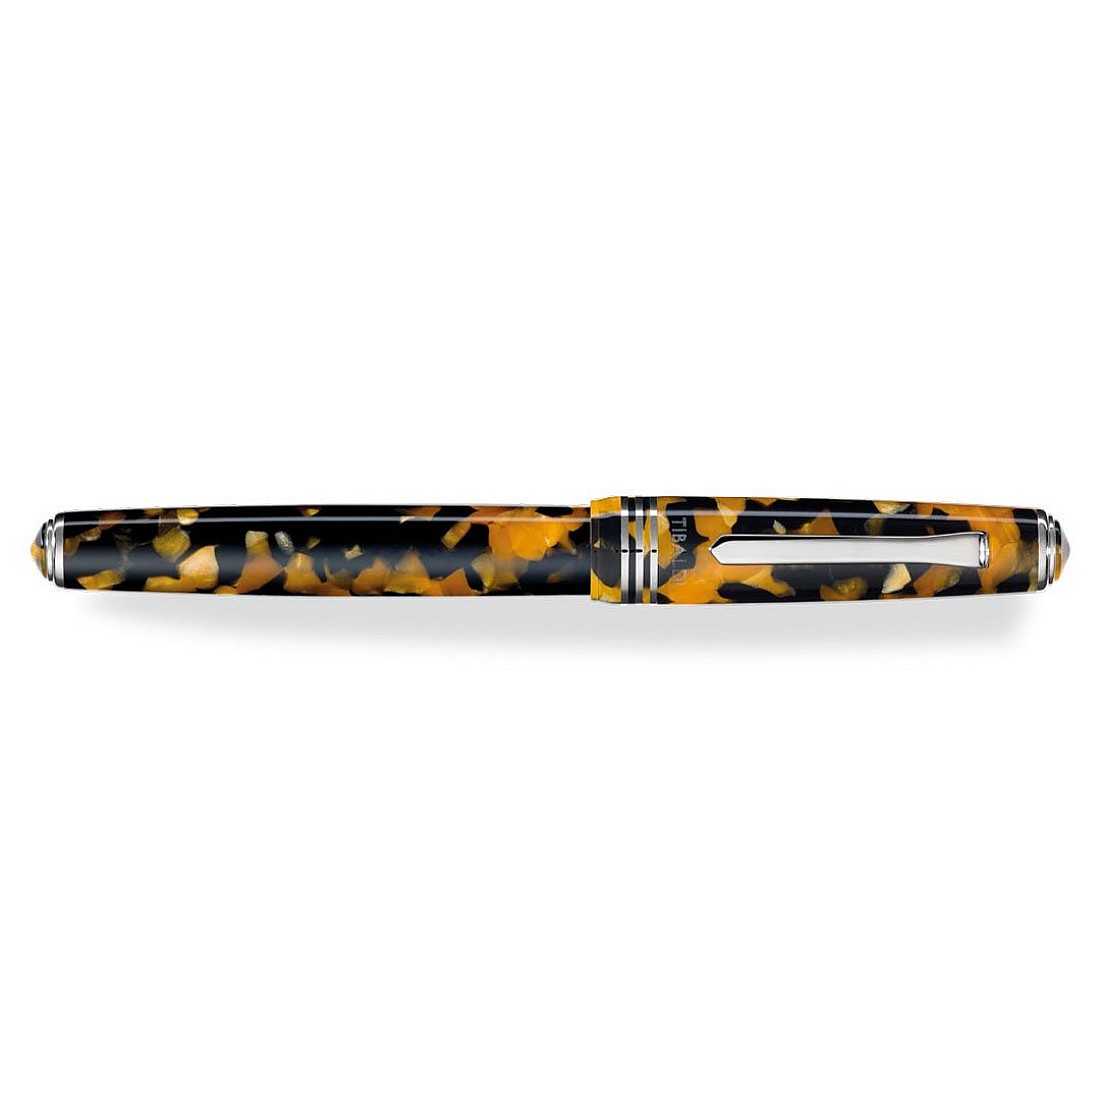 Tibaldi No.60 Amber Yellow Fountain pen